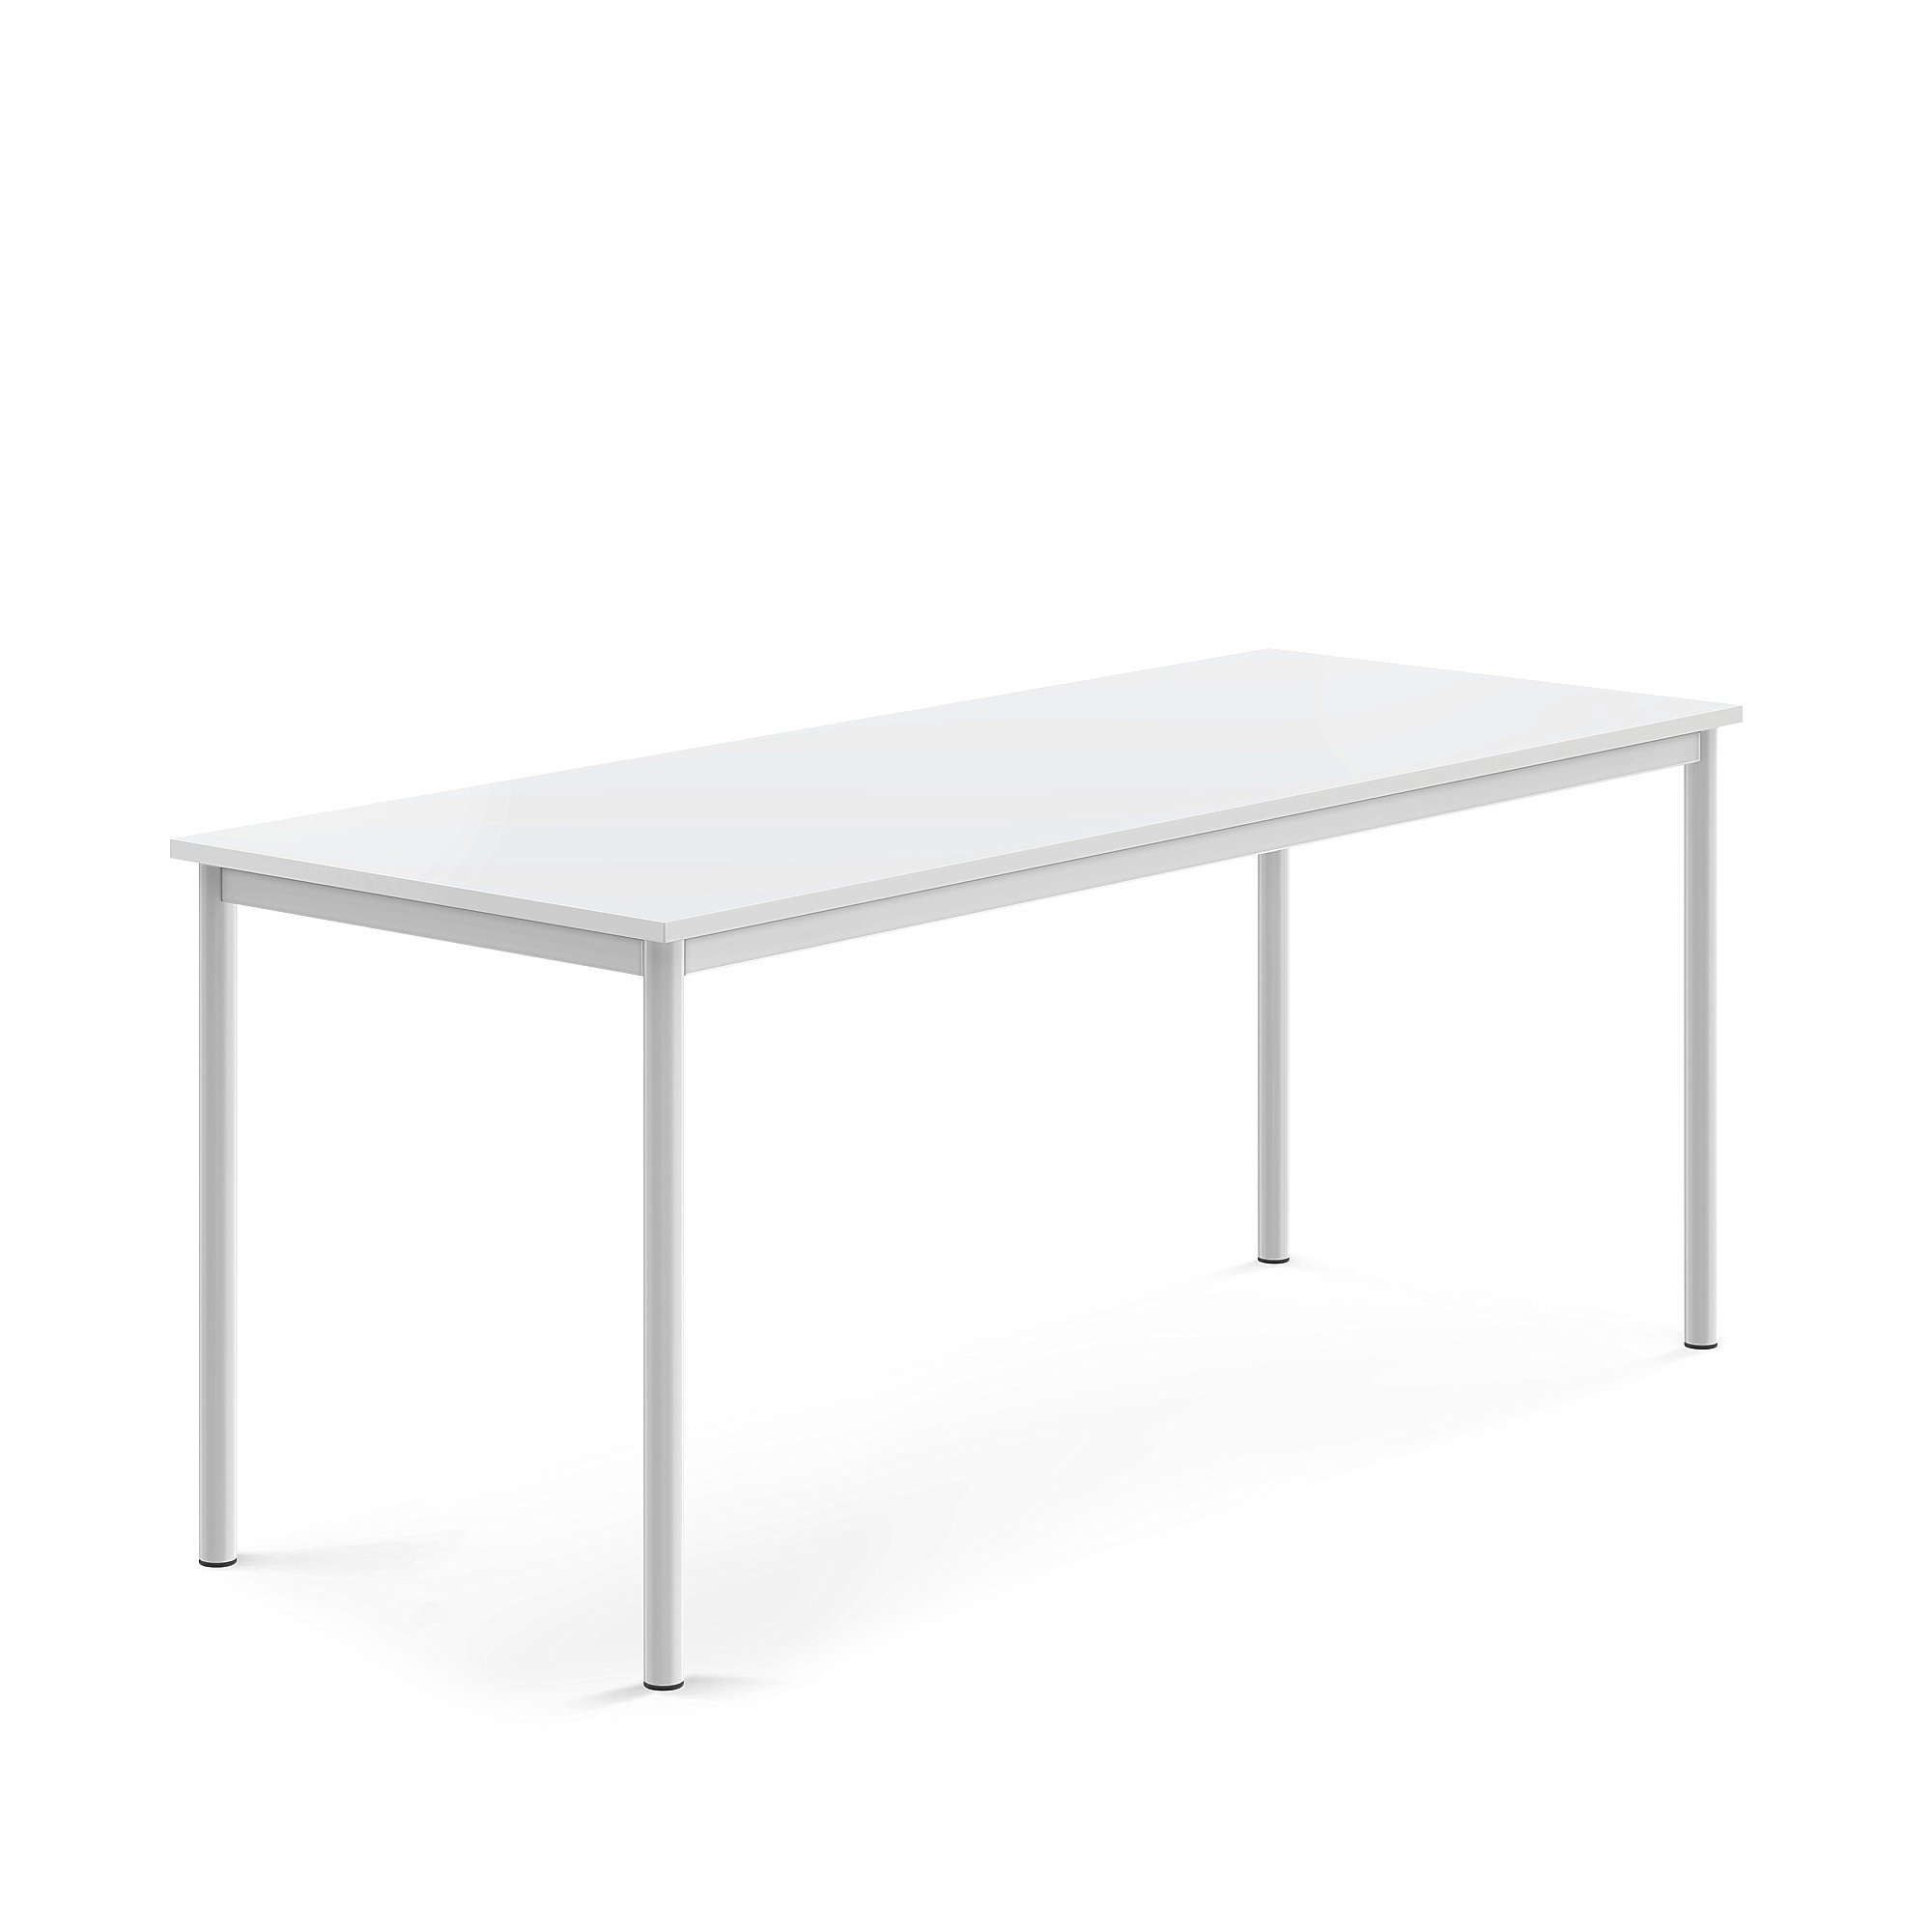 Stůl SONITUS, 1800x700x720 mm, bílé nohy, HPL deska tlumící hluk, bílá